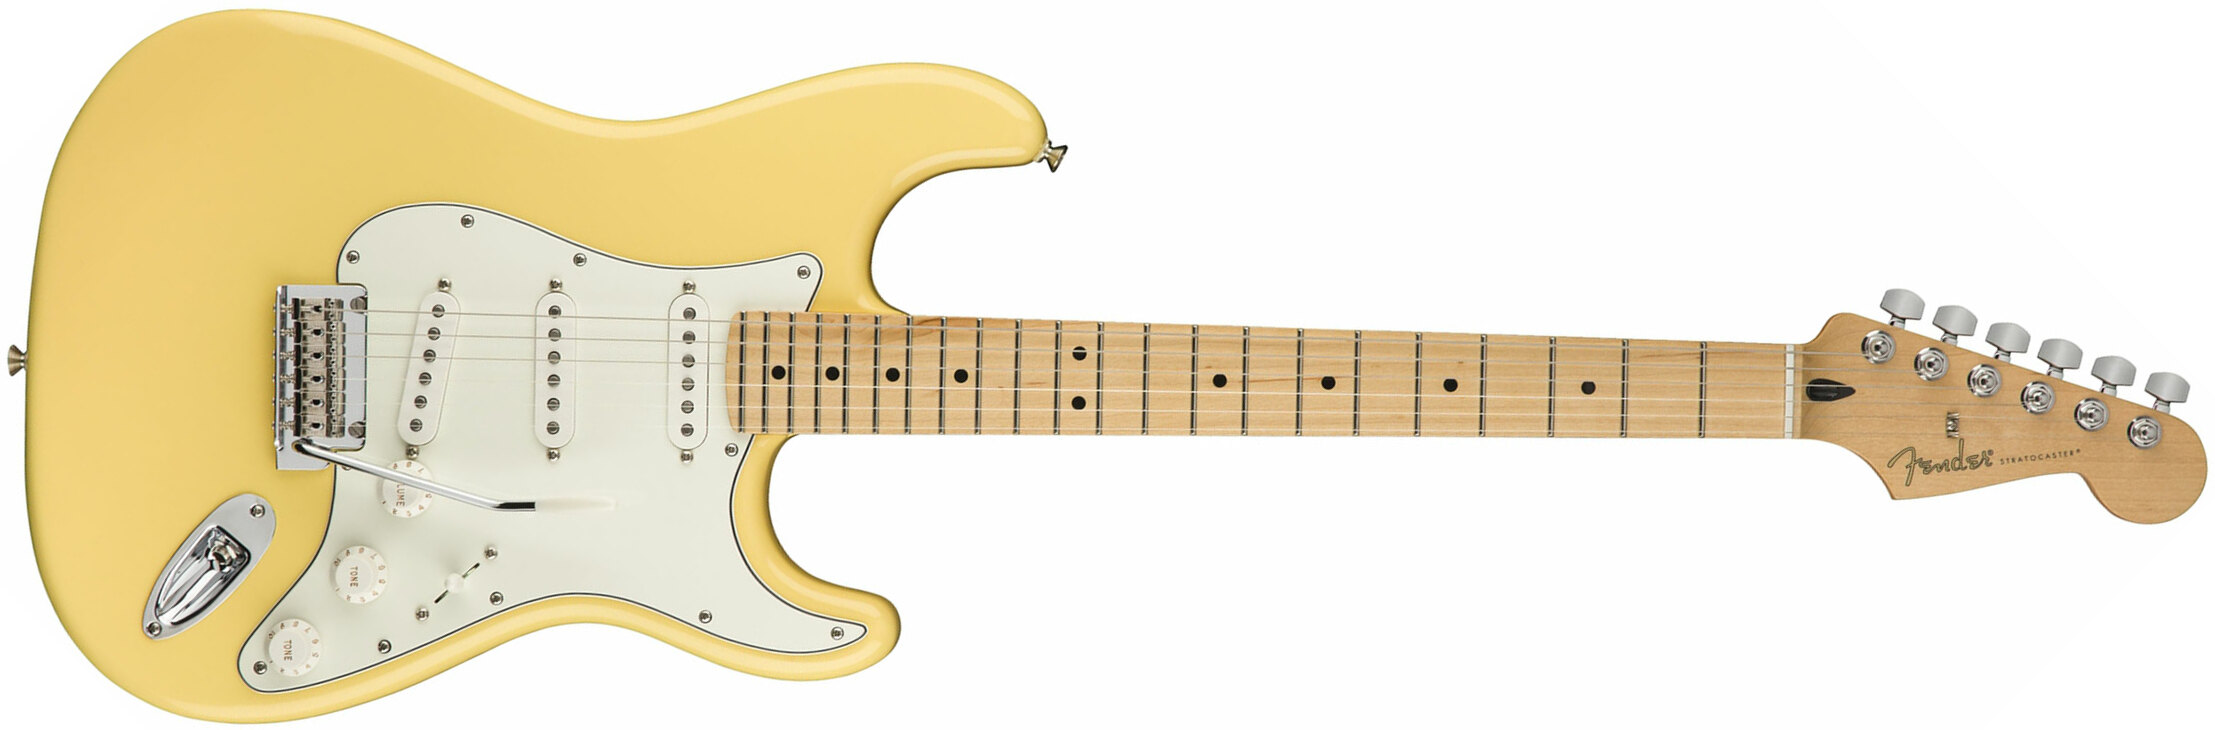 Fender Strat Player Mex Sss Mn - Buttercream - Str shape electric guitar - Main picture